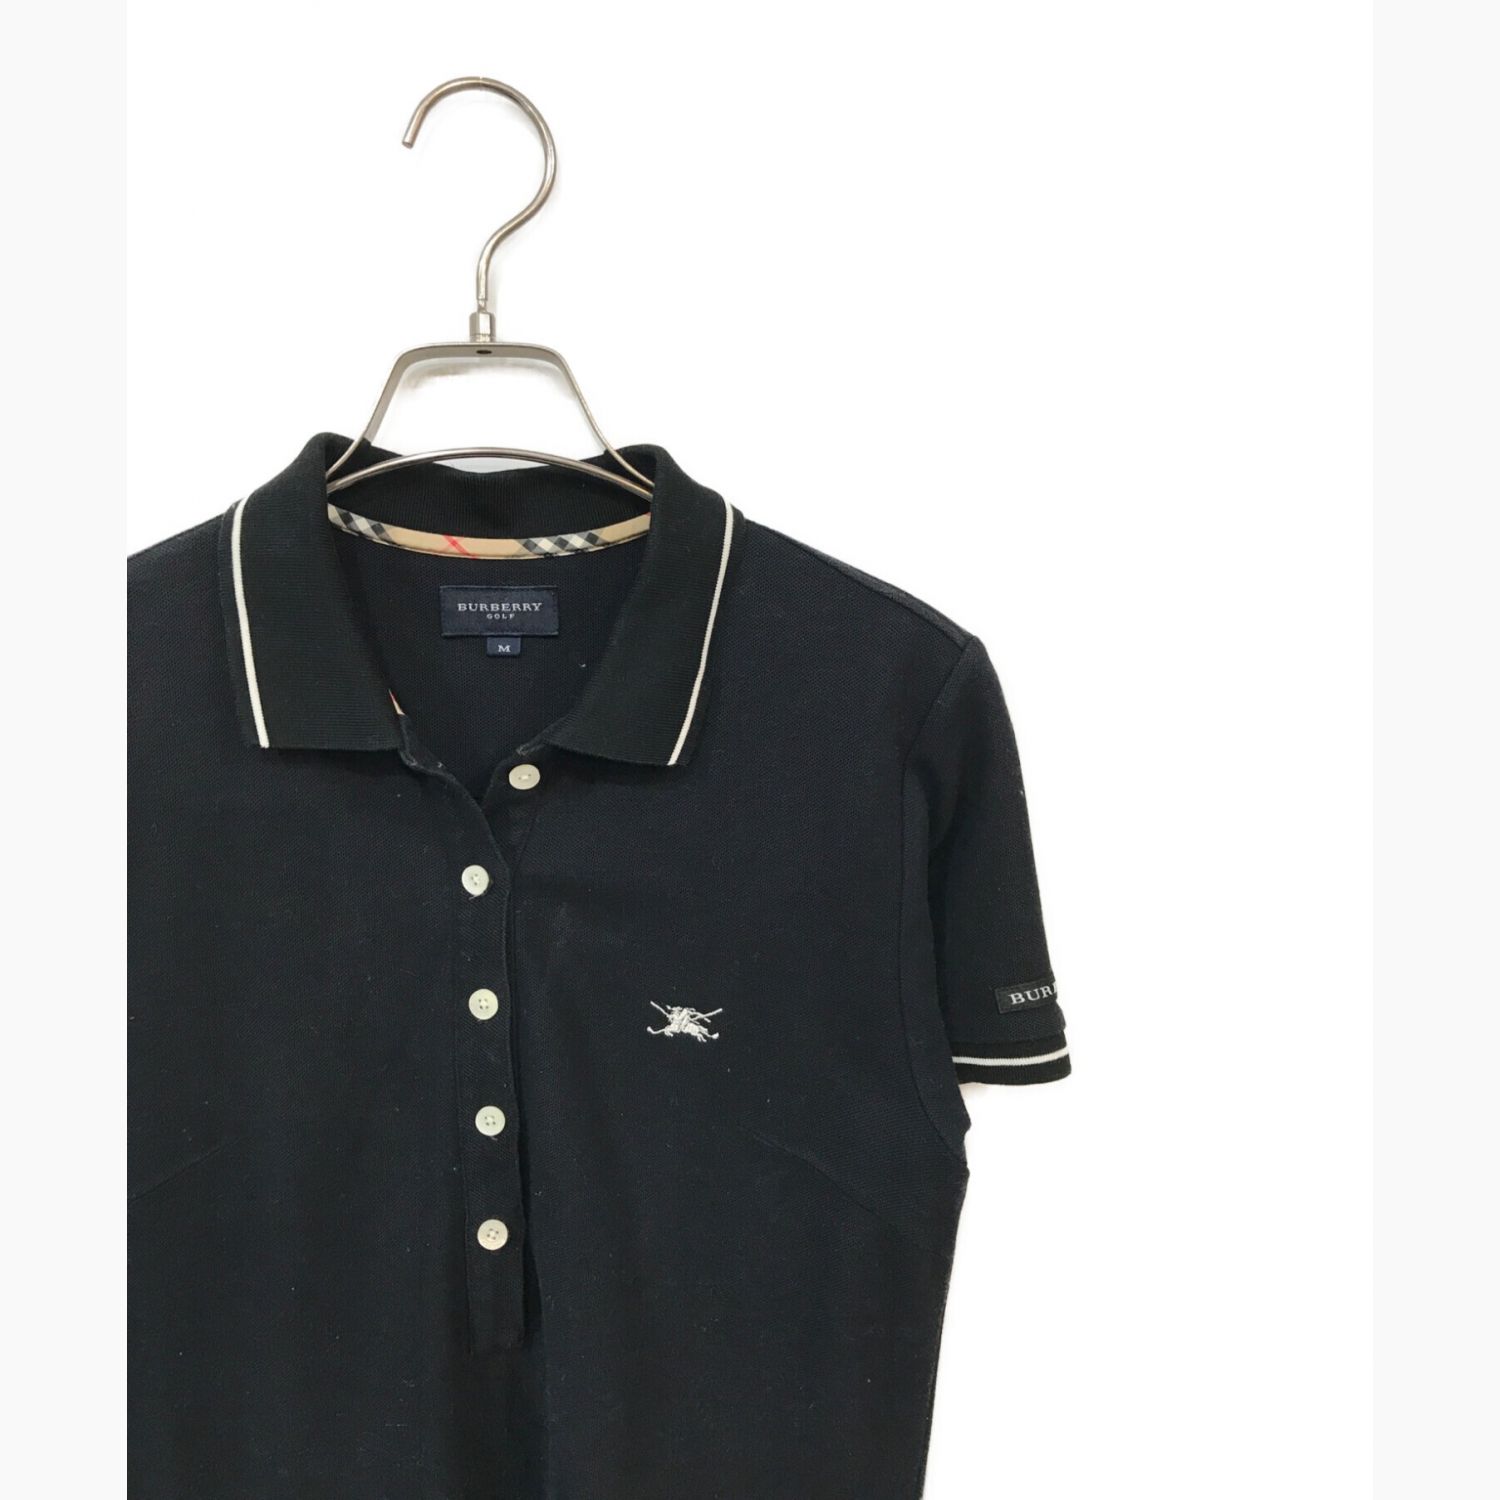 A2756 バーバリーゴルフ 半袖ポロシャツ 綿 ワンポイント刺繡 黒 L